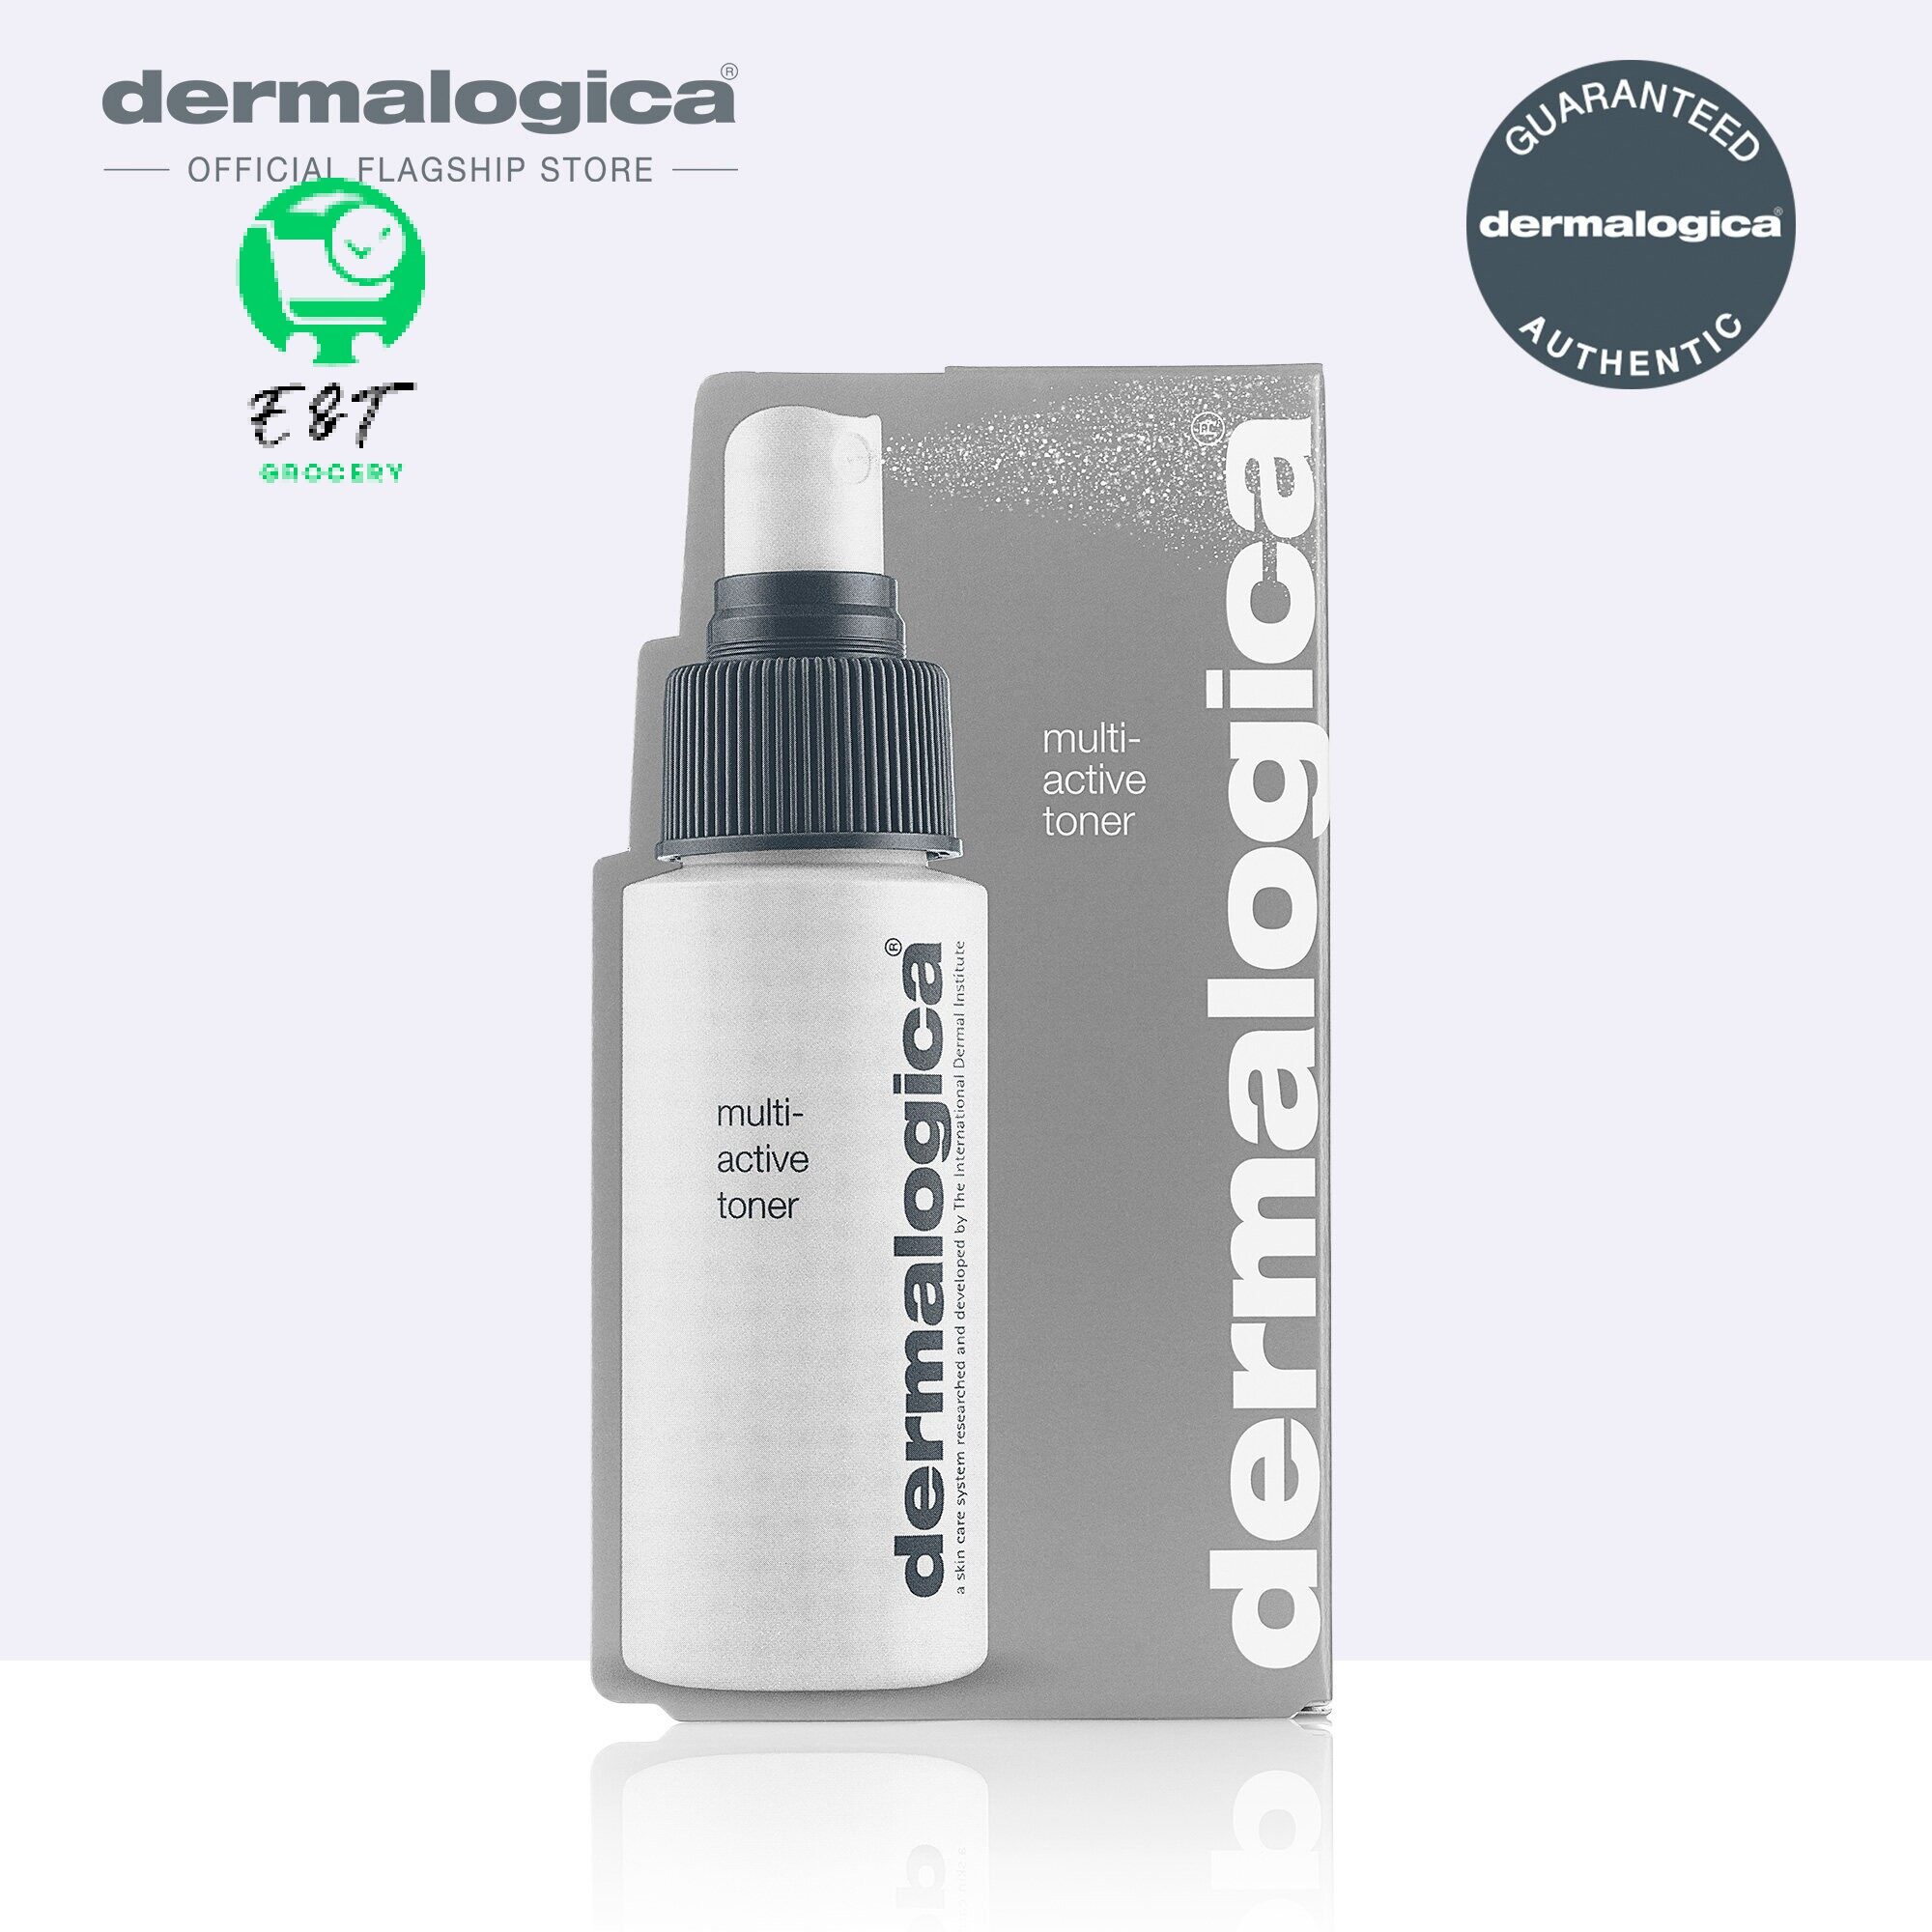 dermalogica multi active toner (50ml) hydrating, refreshing spritz